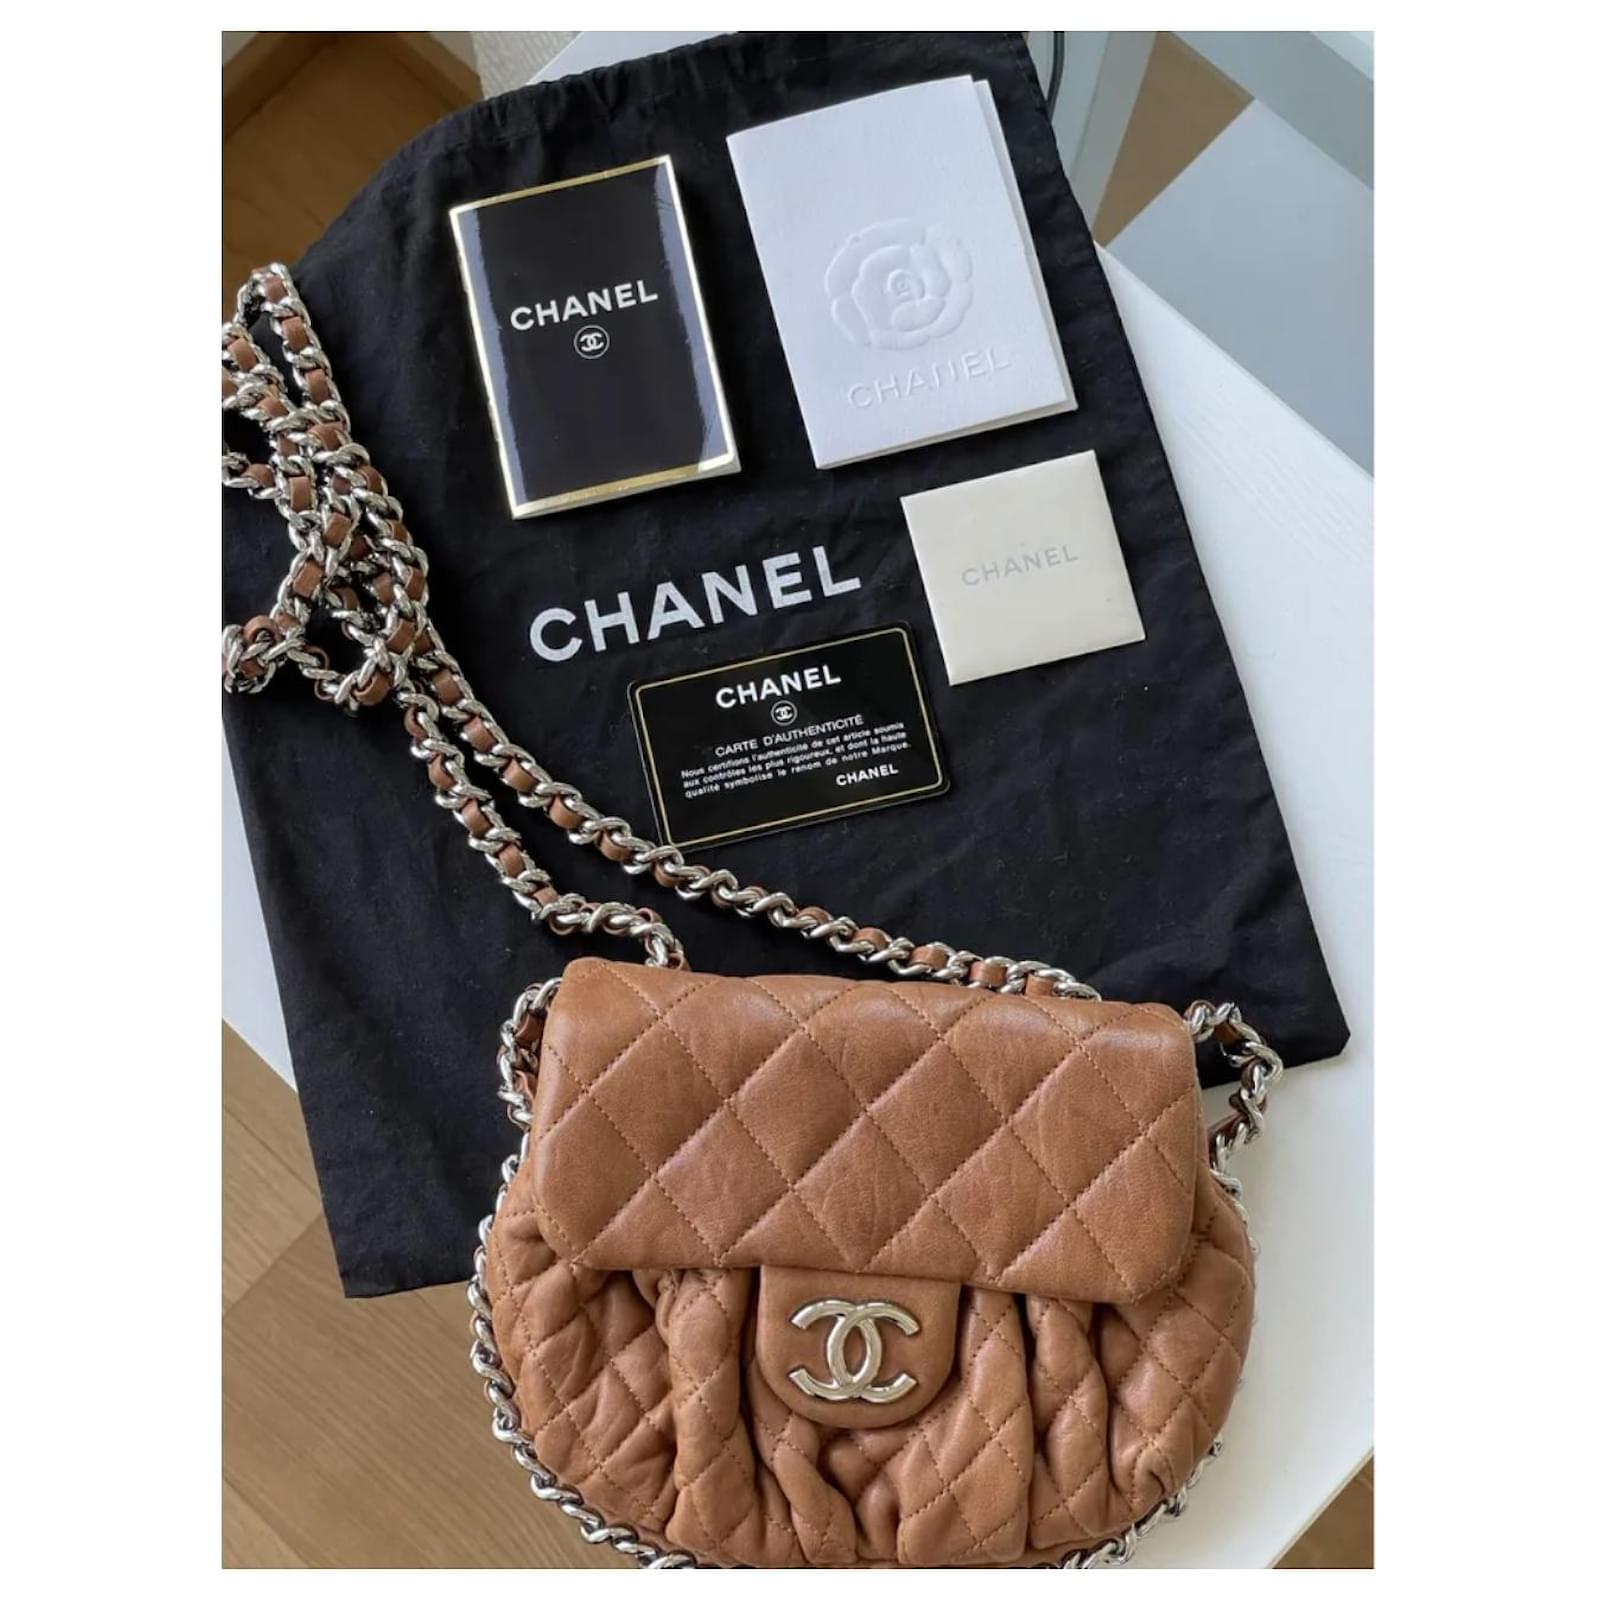 Chanel Chain Around Bag Mini Size In dark beige or camel color